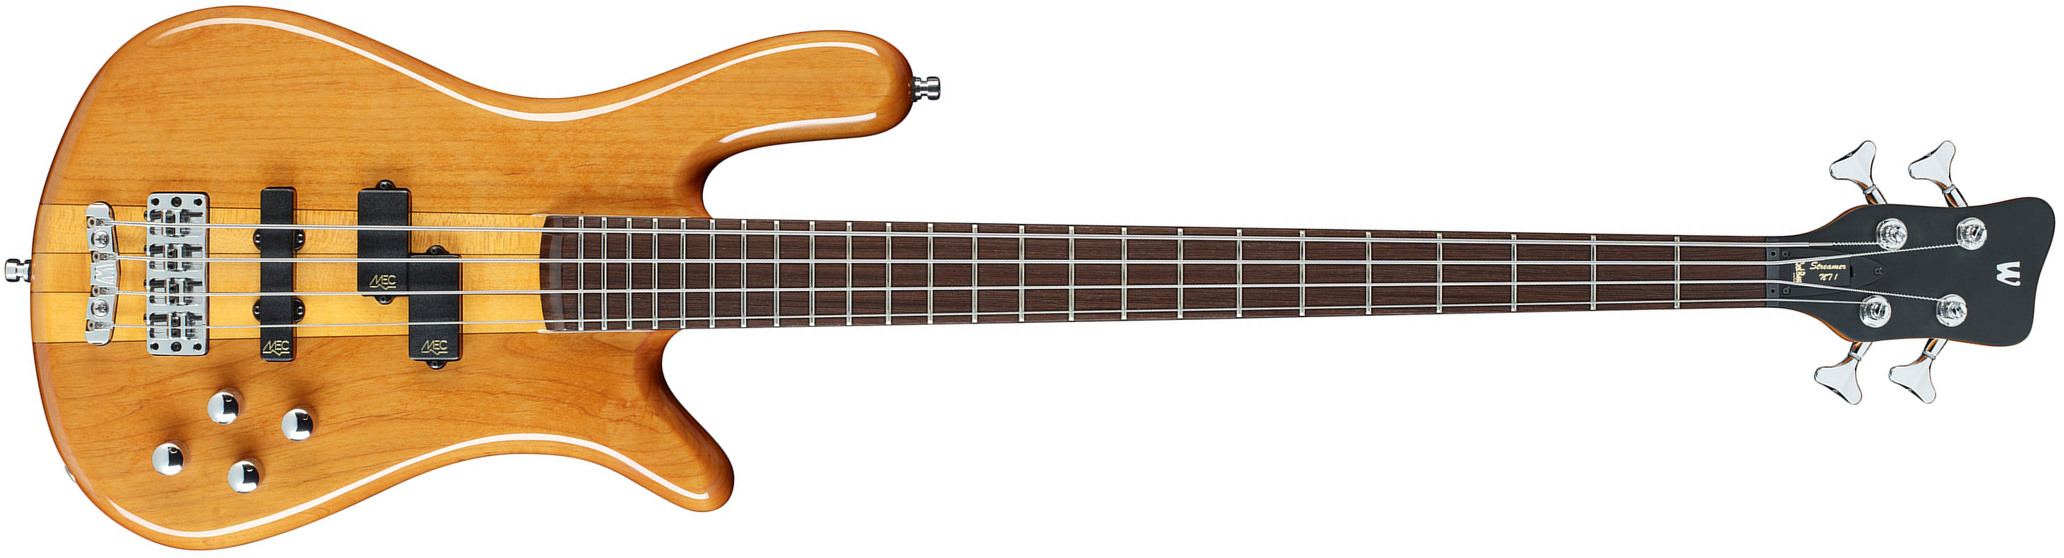 Warwick Streamer Nt4 Rockbass 4c Active Wen - Honey Violin - Solid body elektrische bas - Main picture